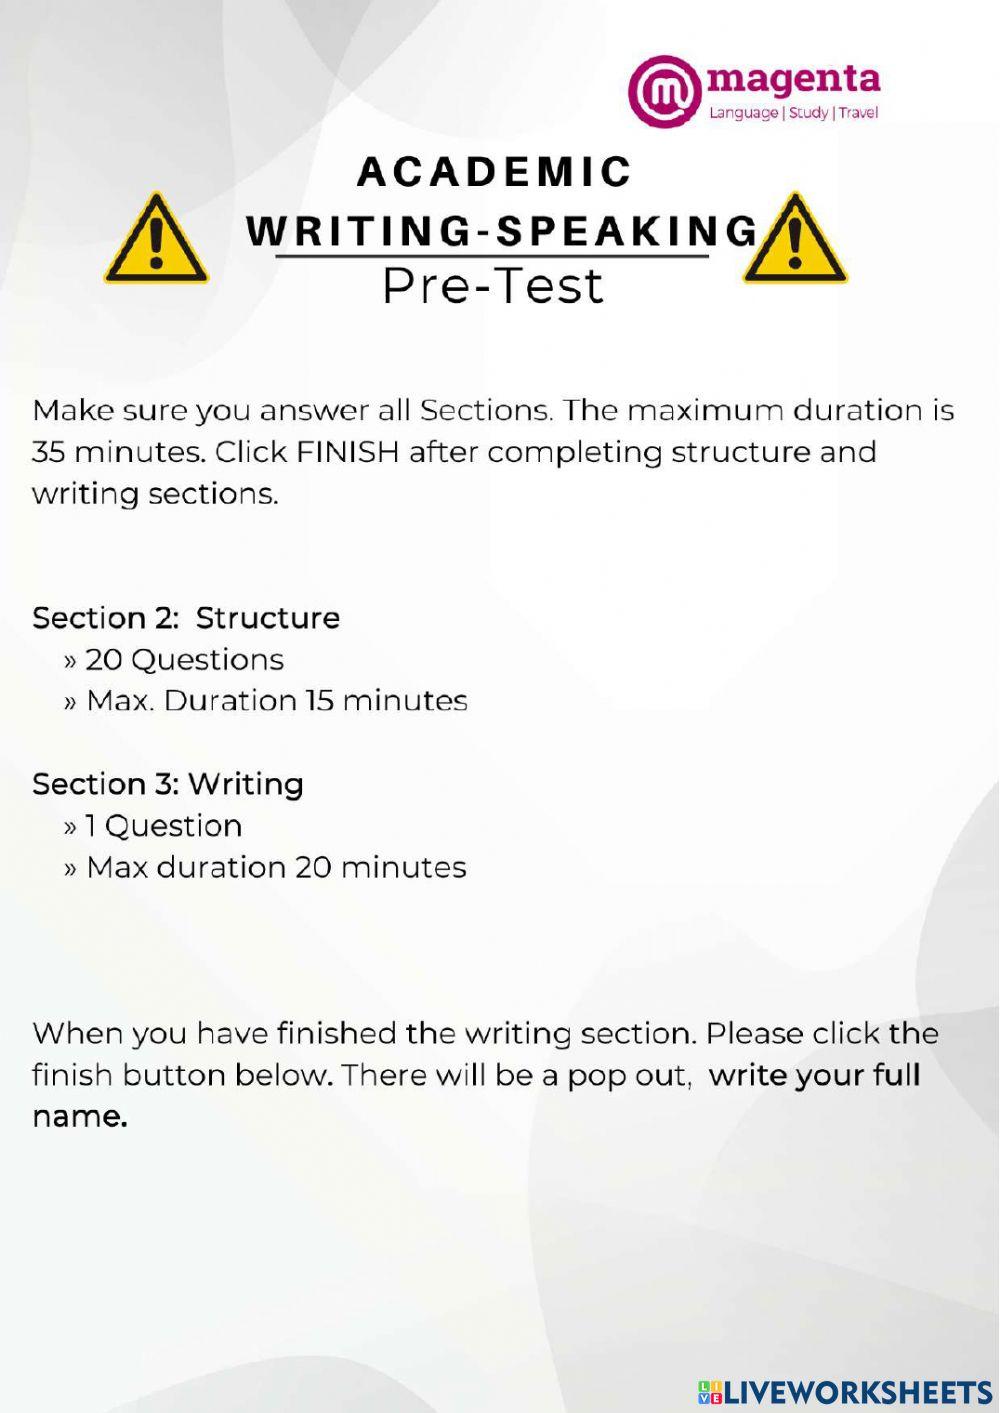 Speaking-Writing Training